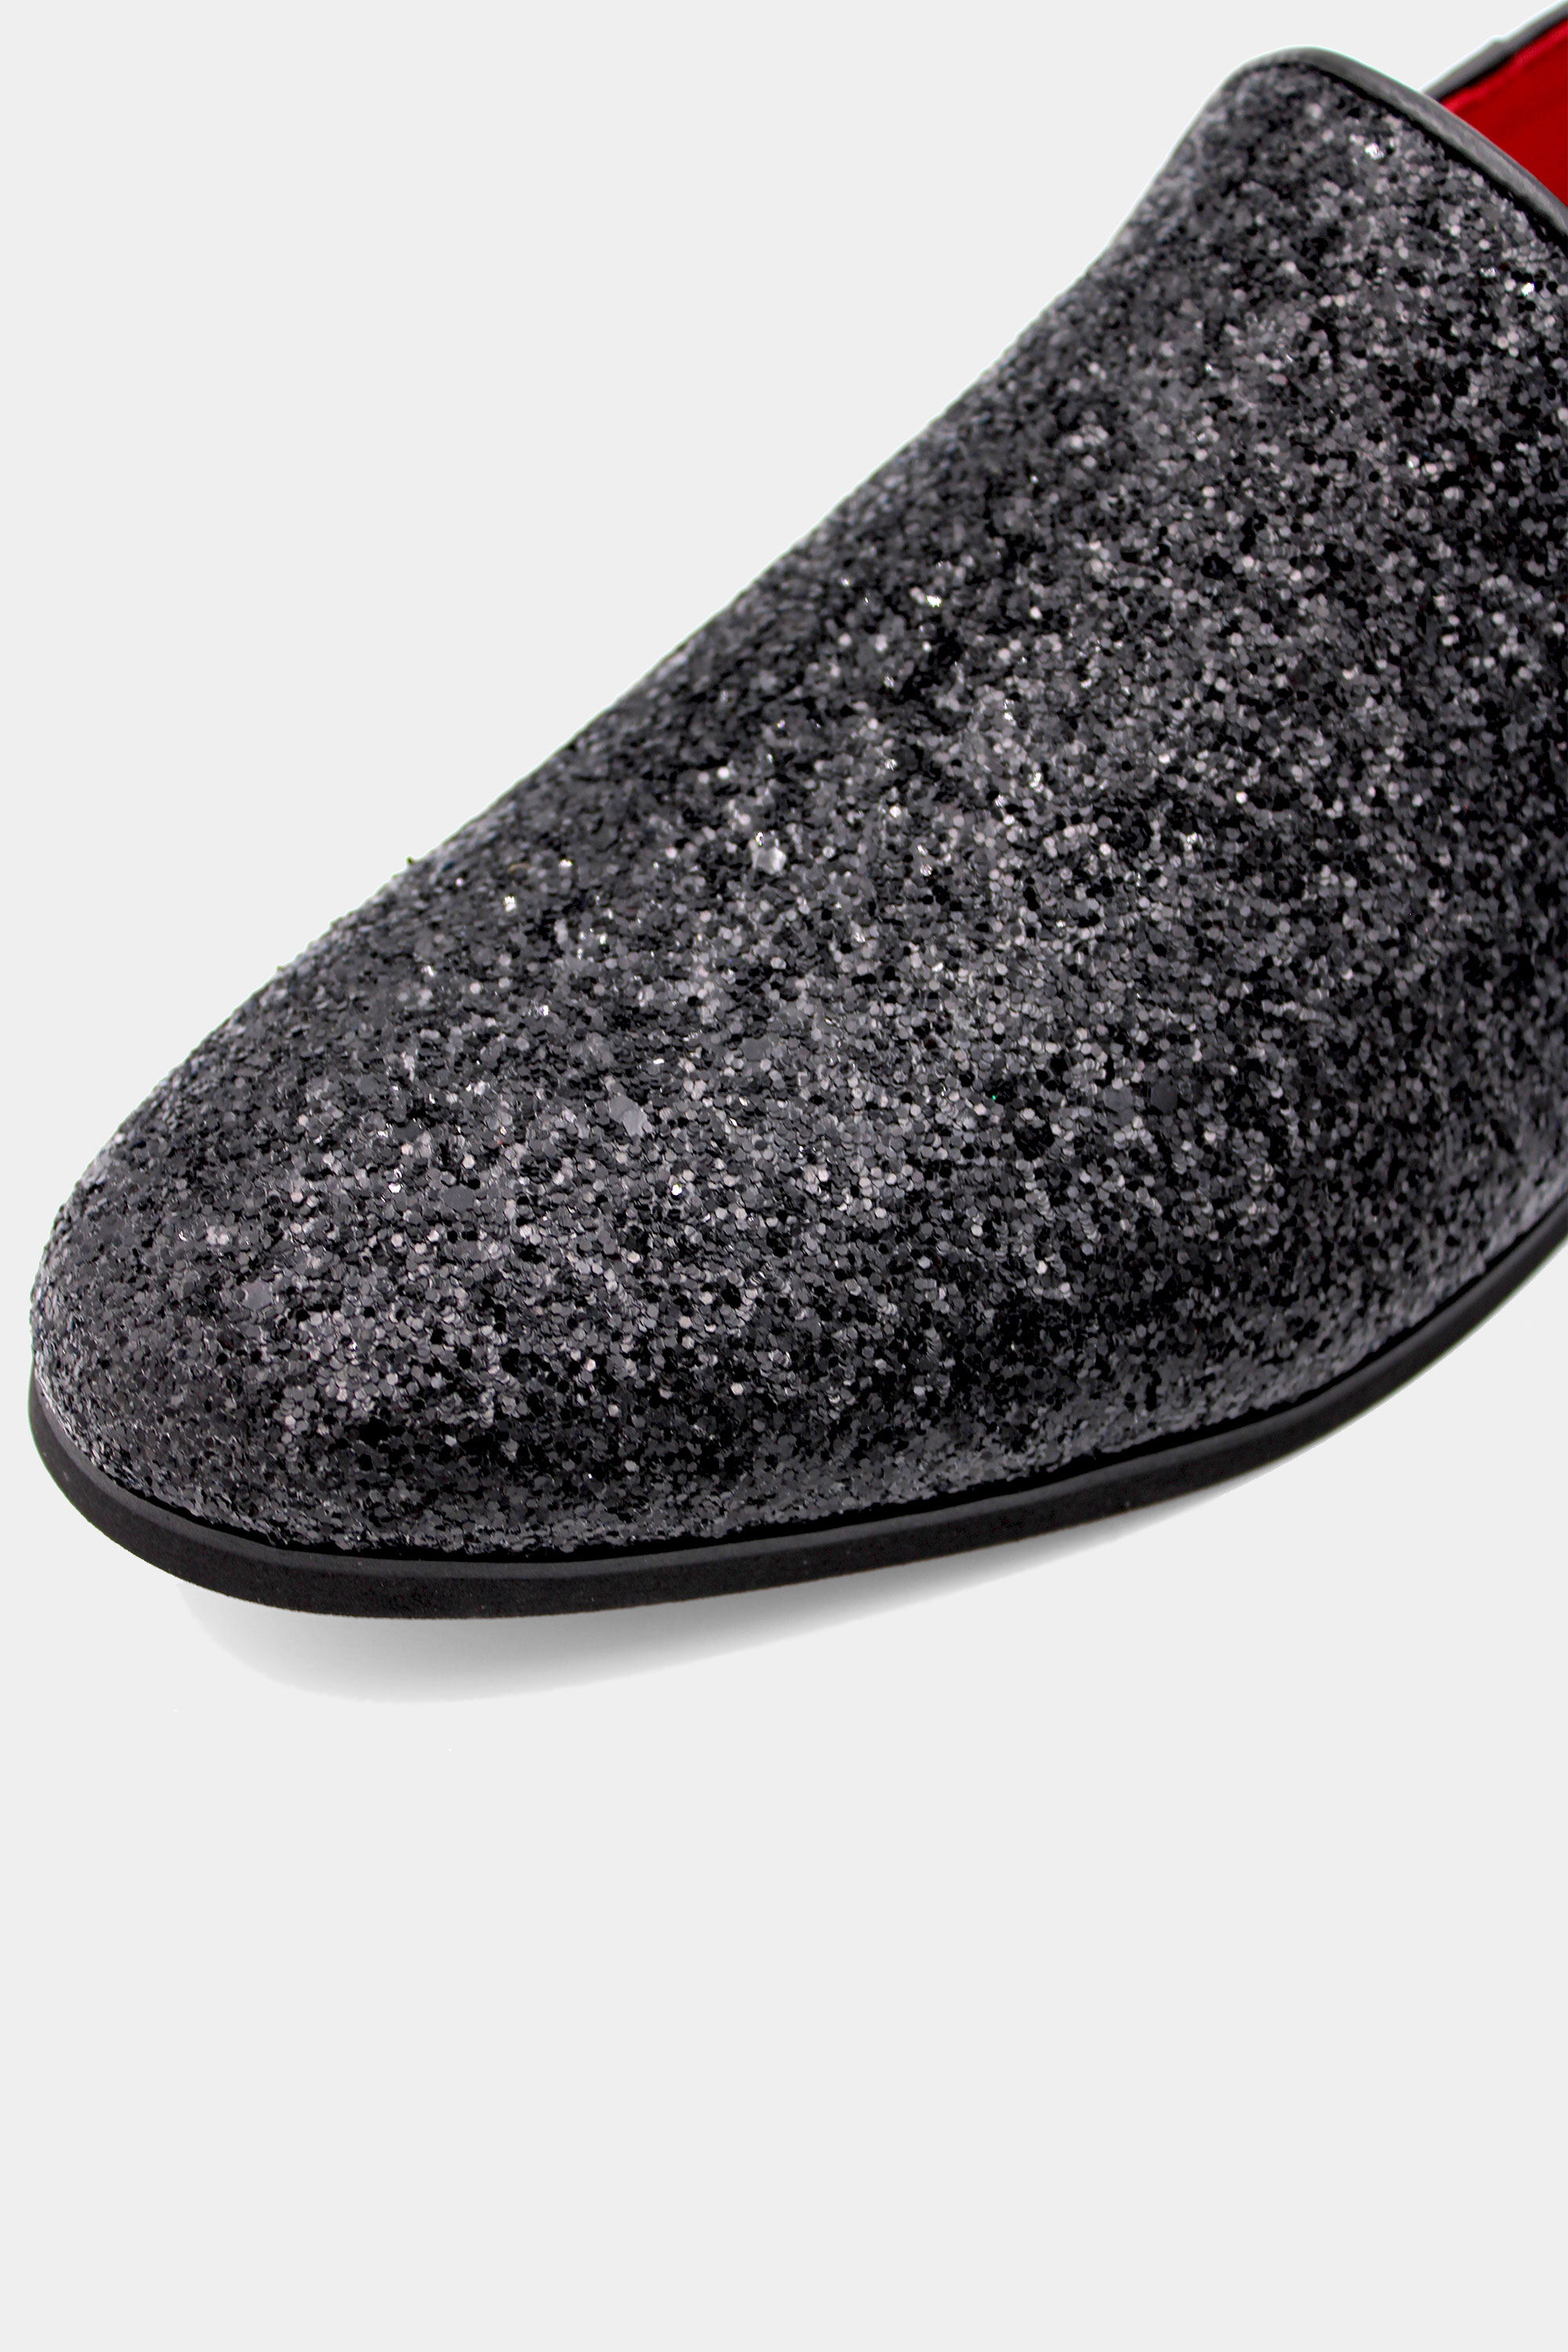 Black-Sparkly-Prom-Loafers-from-Gentlemansguru.com